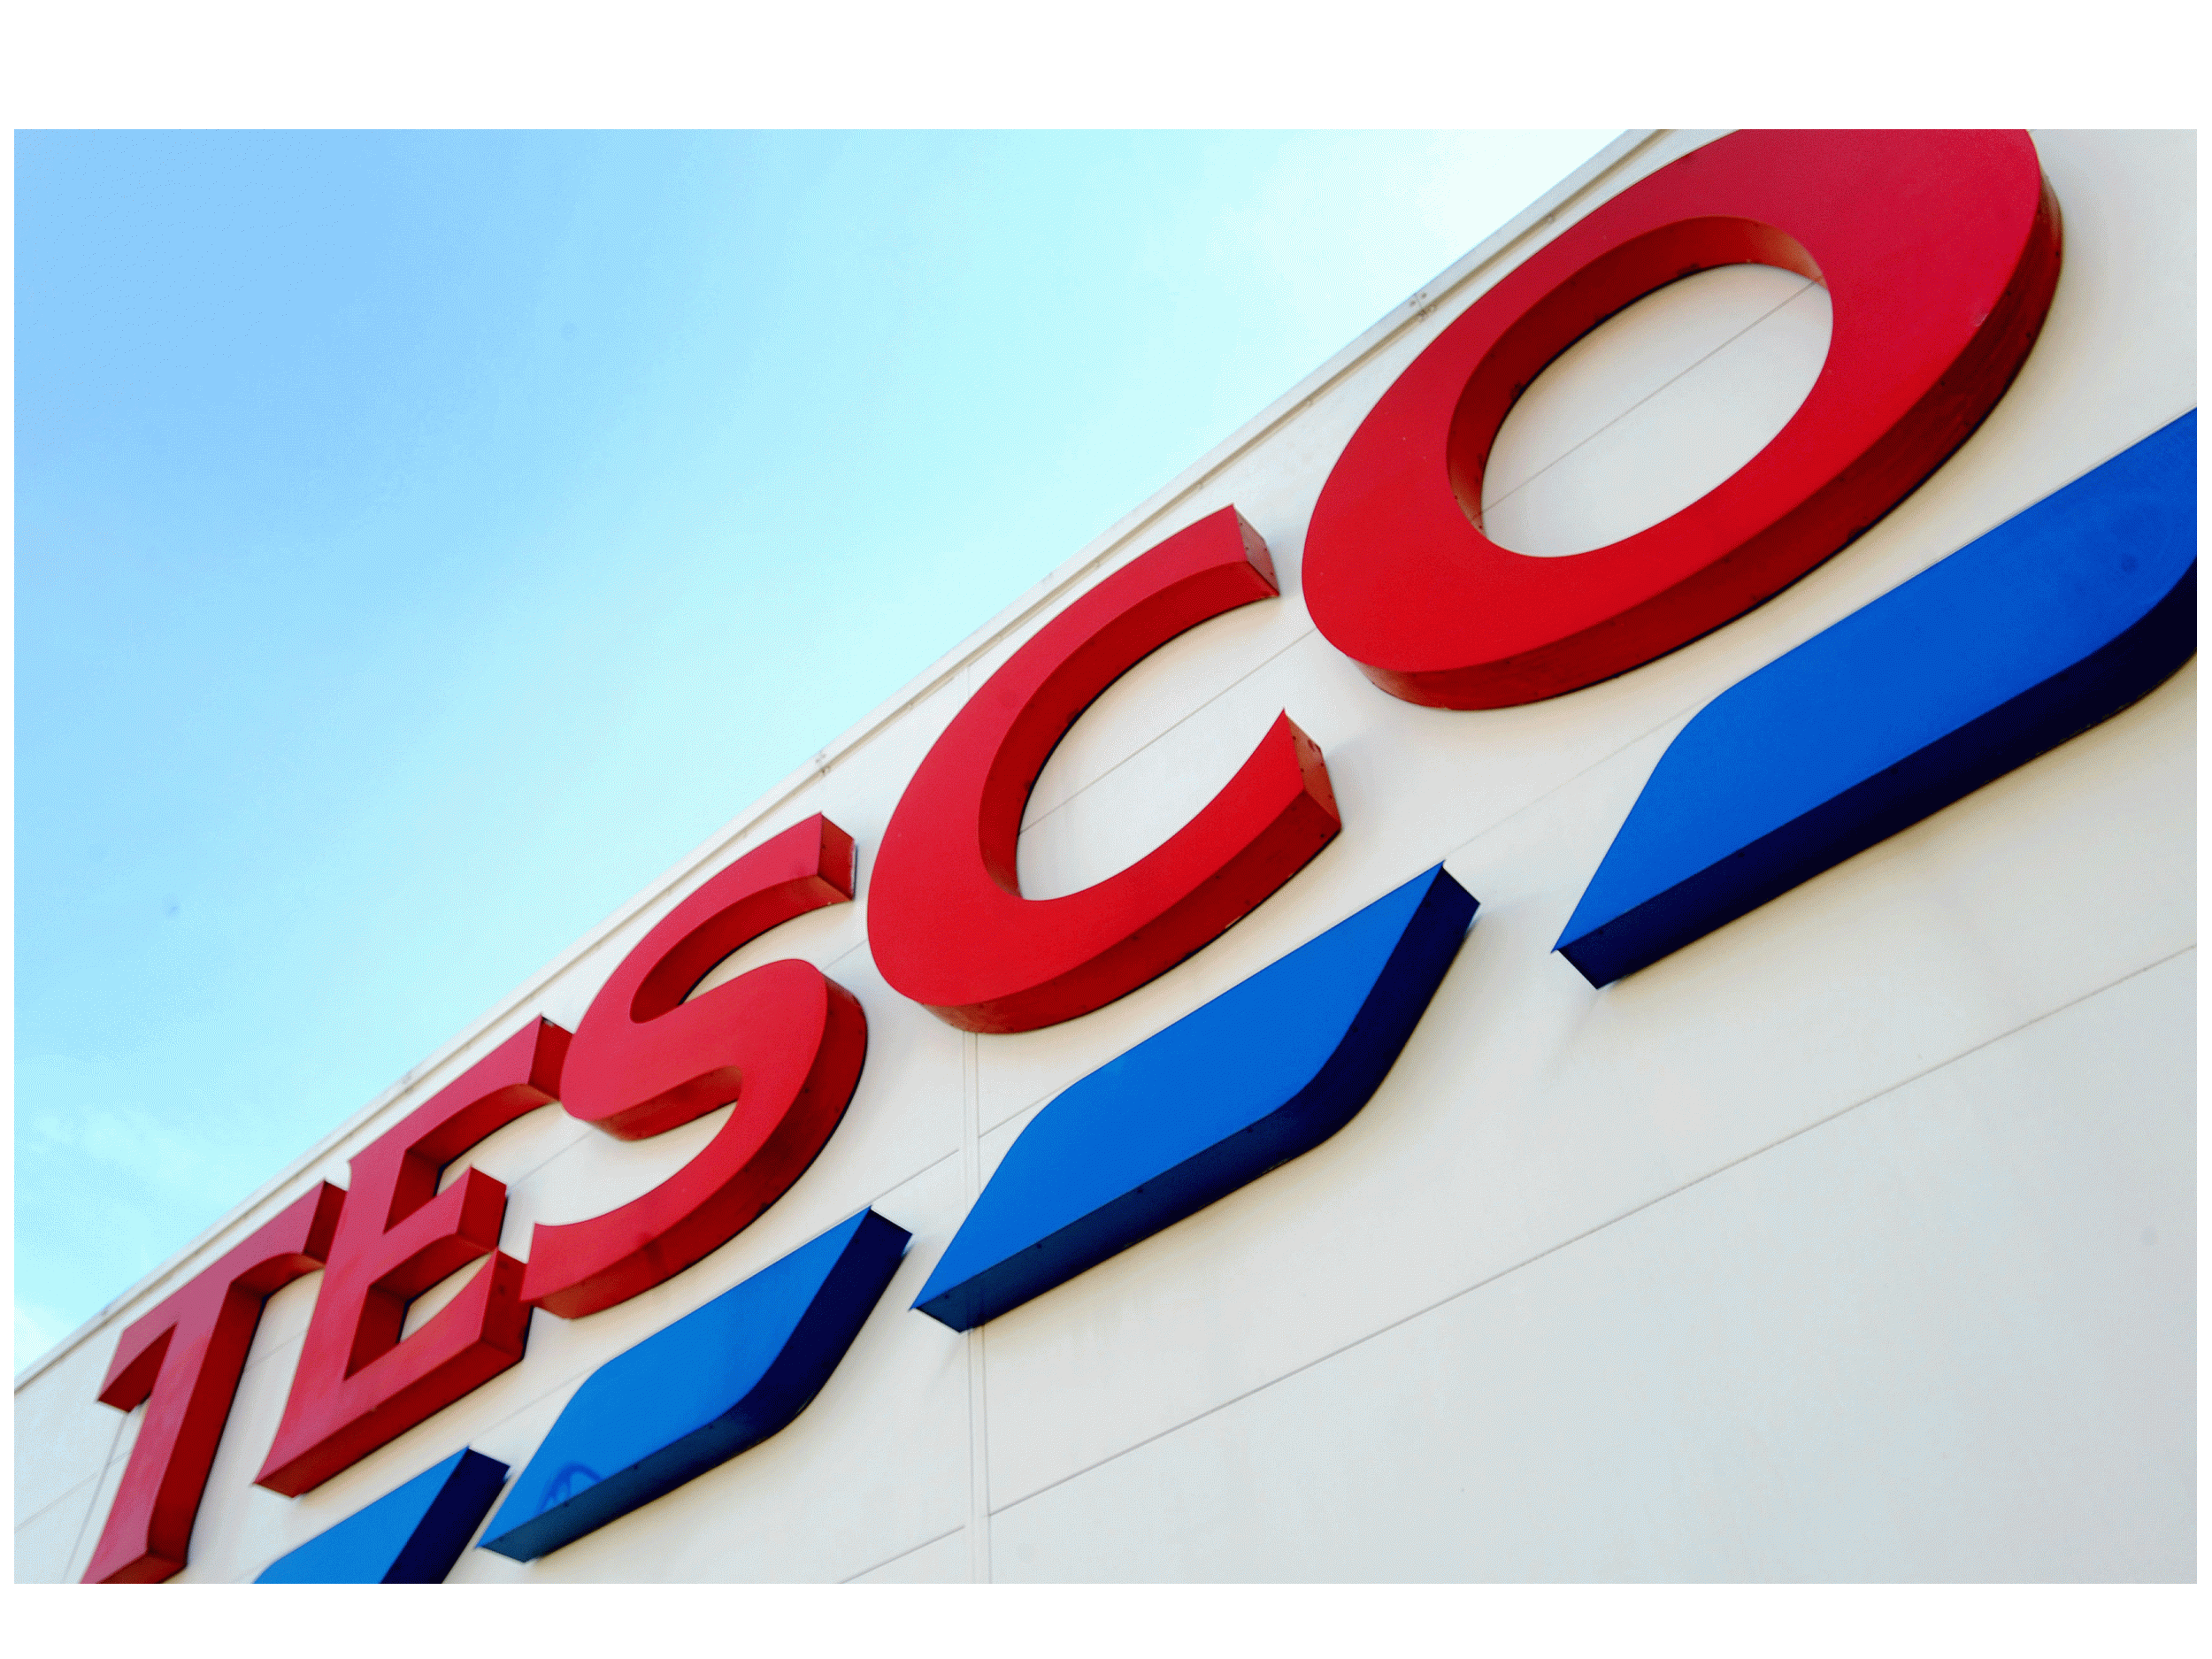 Tesco to cut 1,100 call centre jobs amid 'unprecedented challenges'